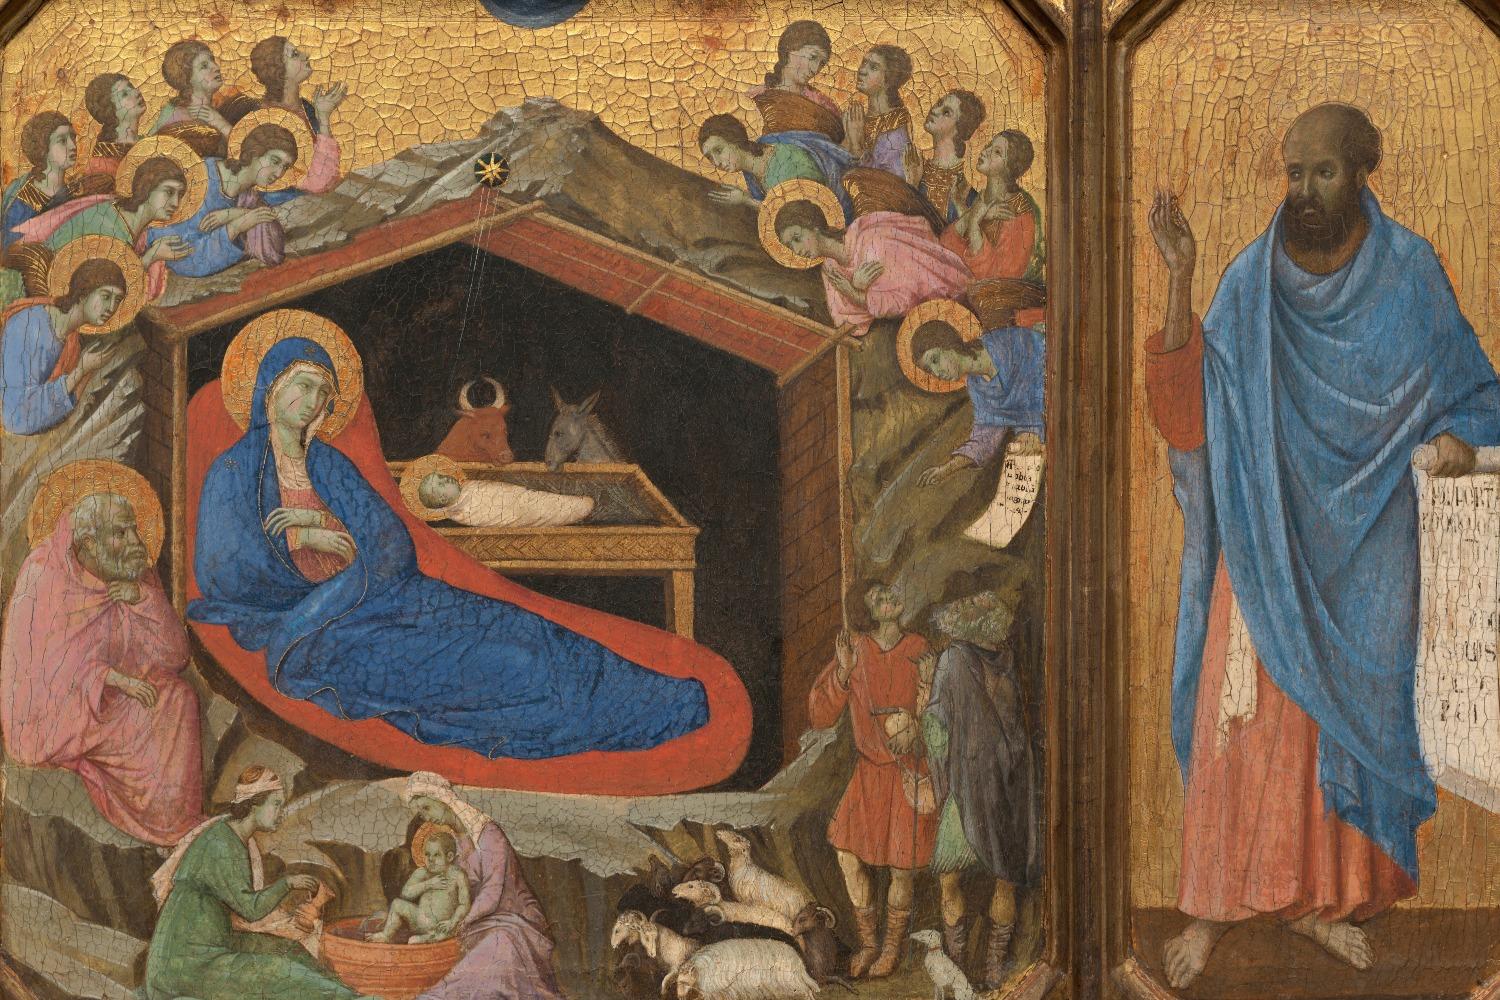 Duccio's "Nativity" and prophet Isaiah on the Maesta